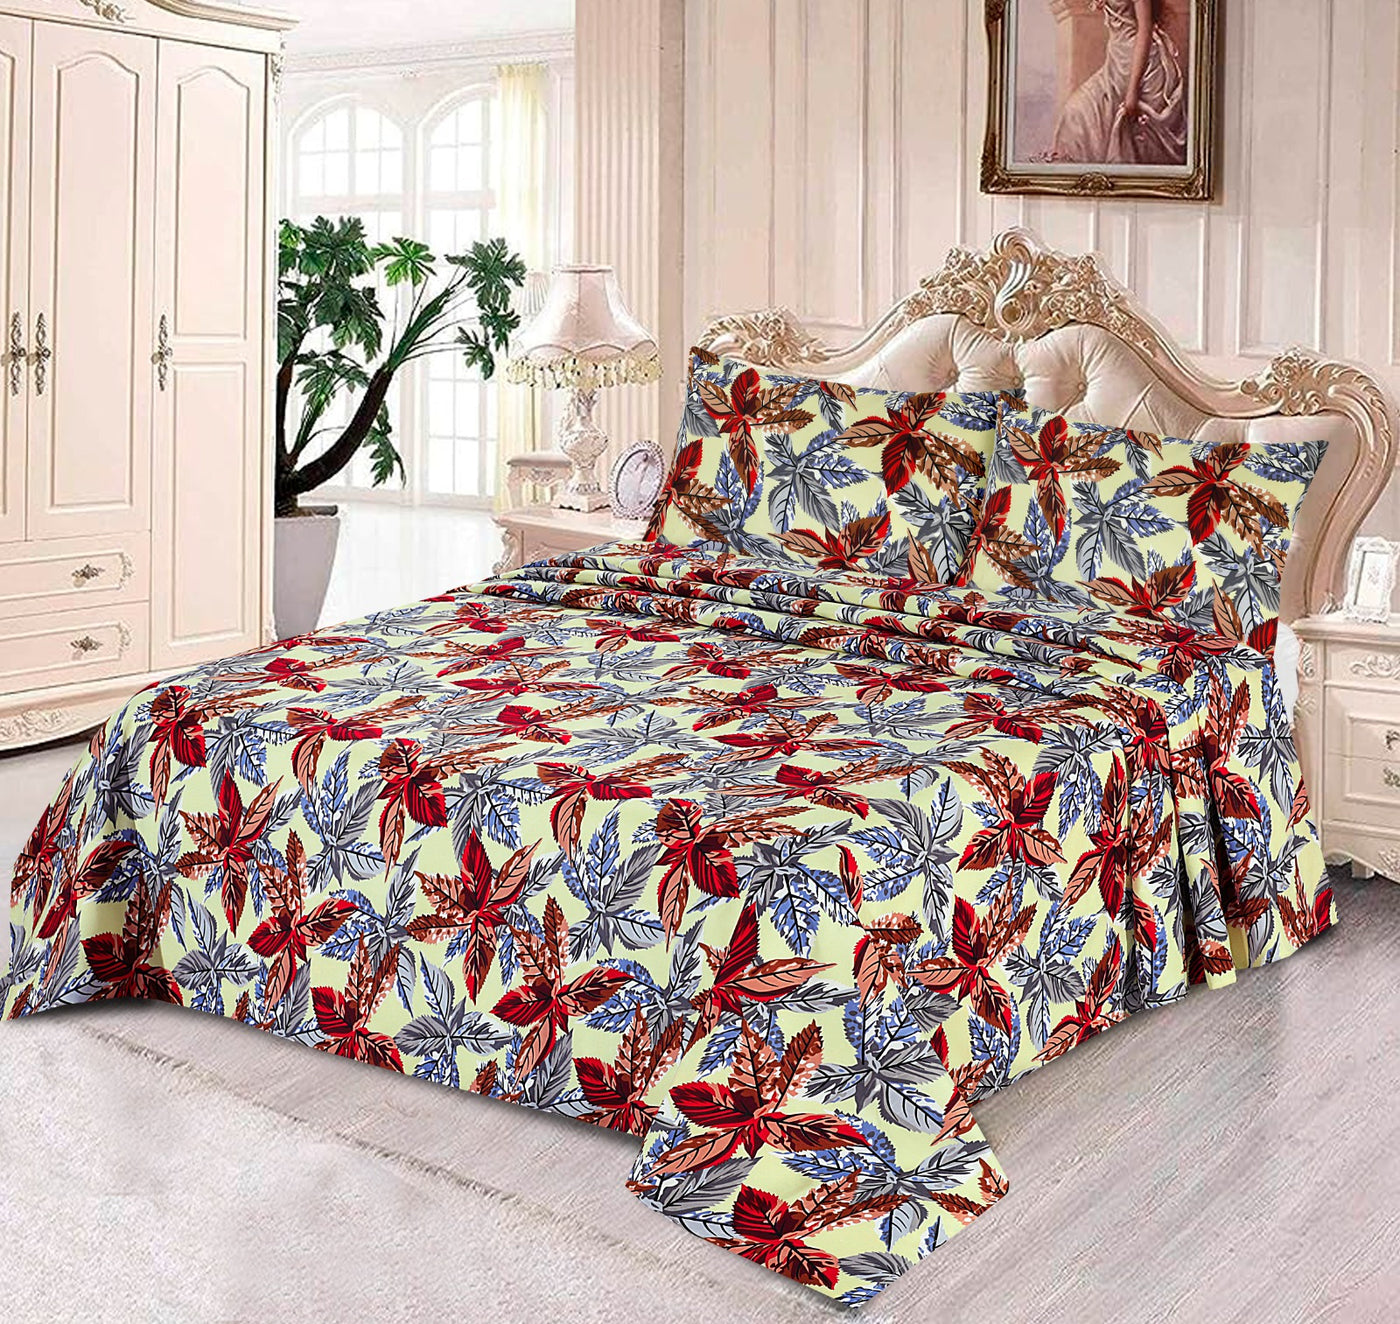 Beauty of King- Bed Sheet Set